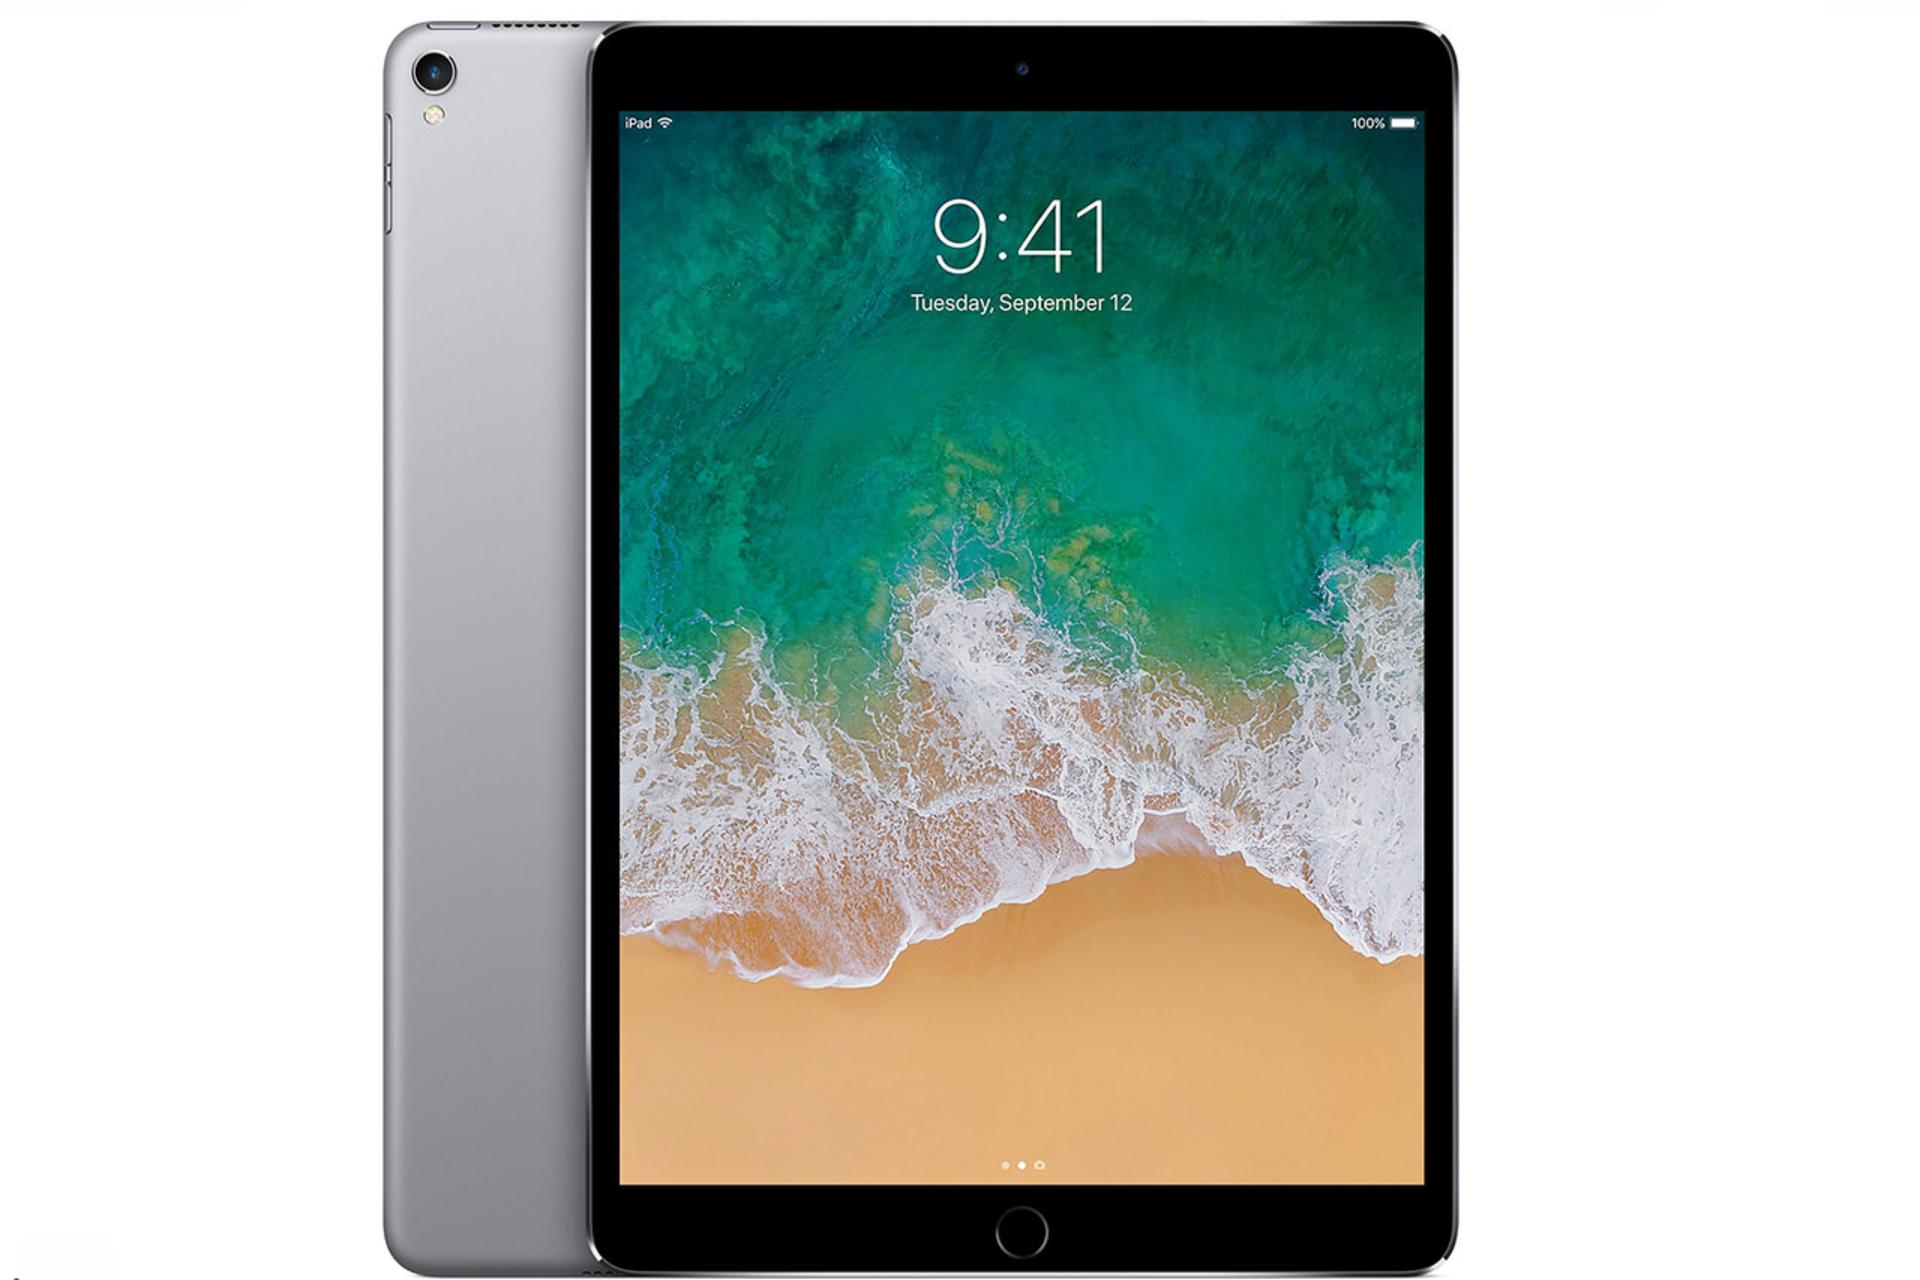 Apple iPad Pro 10.5